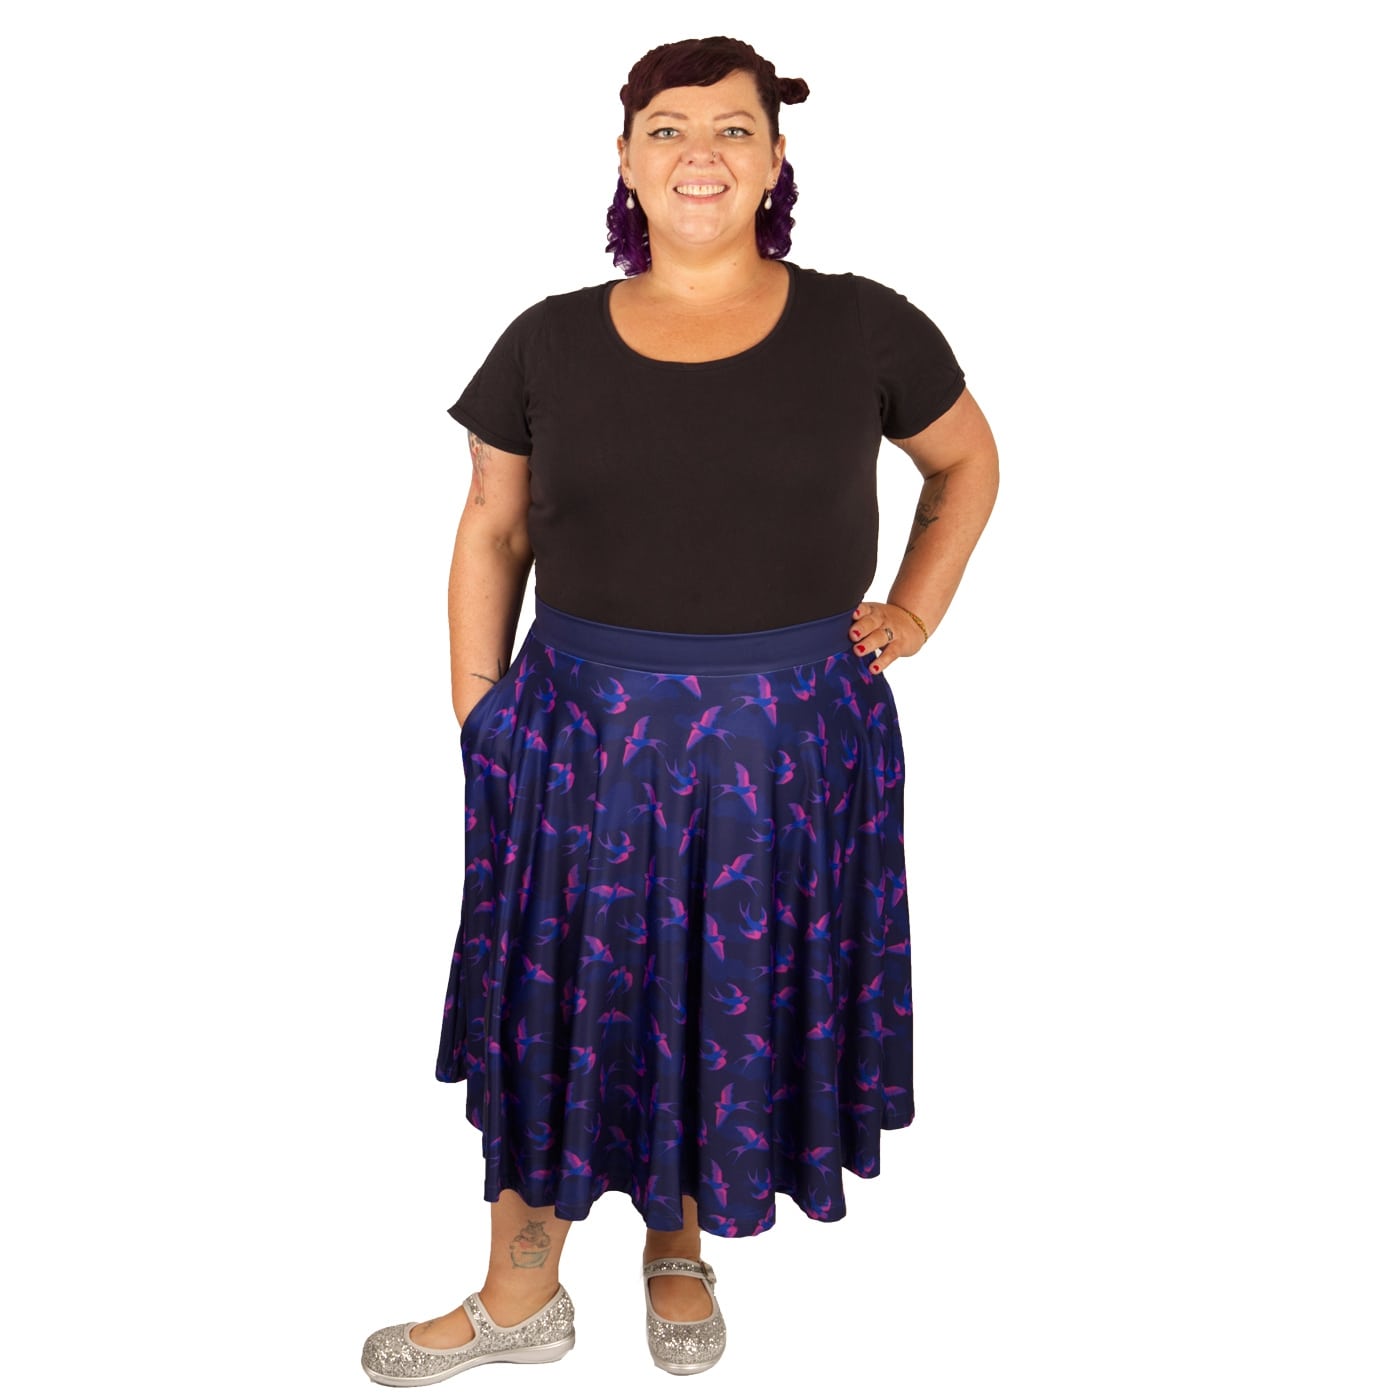 Swoop Swishy Skirt by RainbowsAndFairies.com.au (Swallows - Birds - Purple - Blue - Vintage Inspired - Kitsch - Skirt With Pockets - Circle Skirt) - SKU: CL_SWISH_SWOOP_ORG - Pic-07